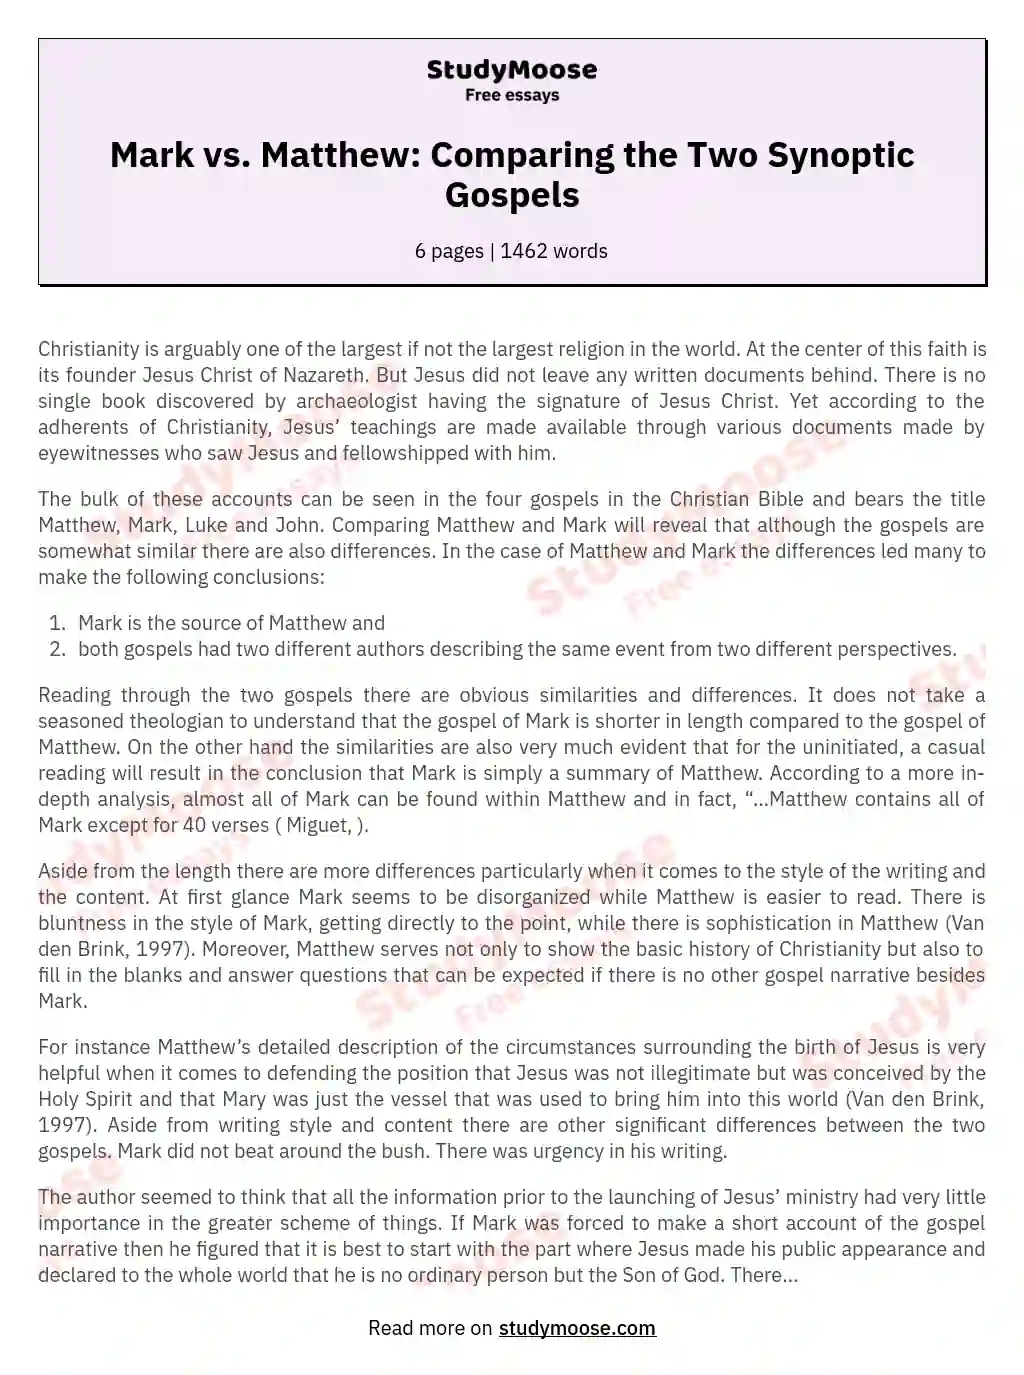 Mark vs. Matthew: Comparing the Two Synoptic Gospels